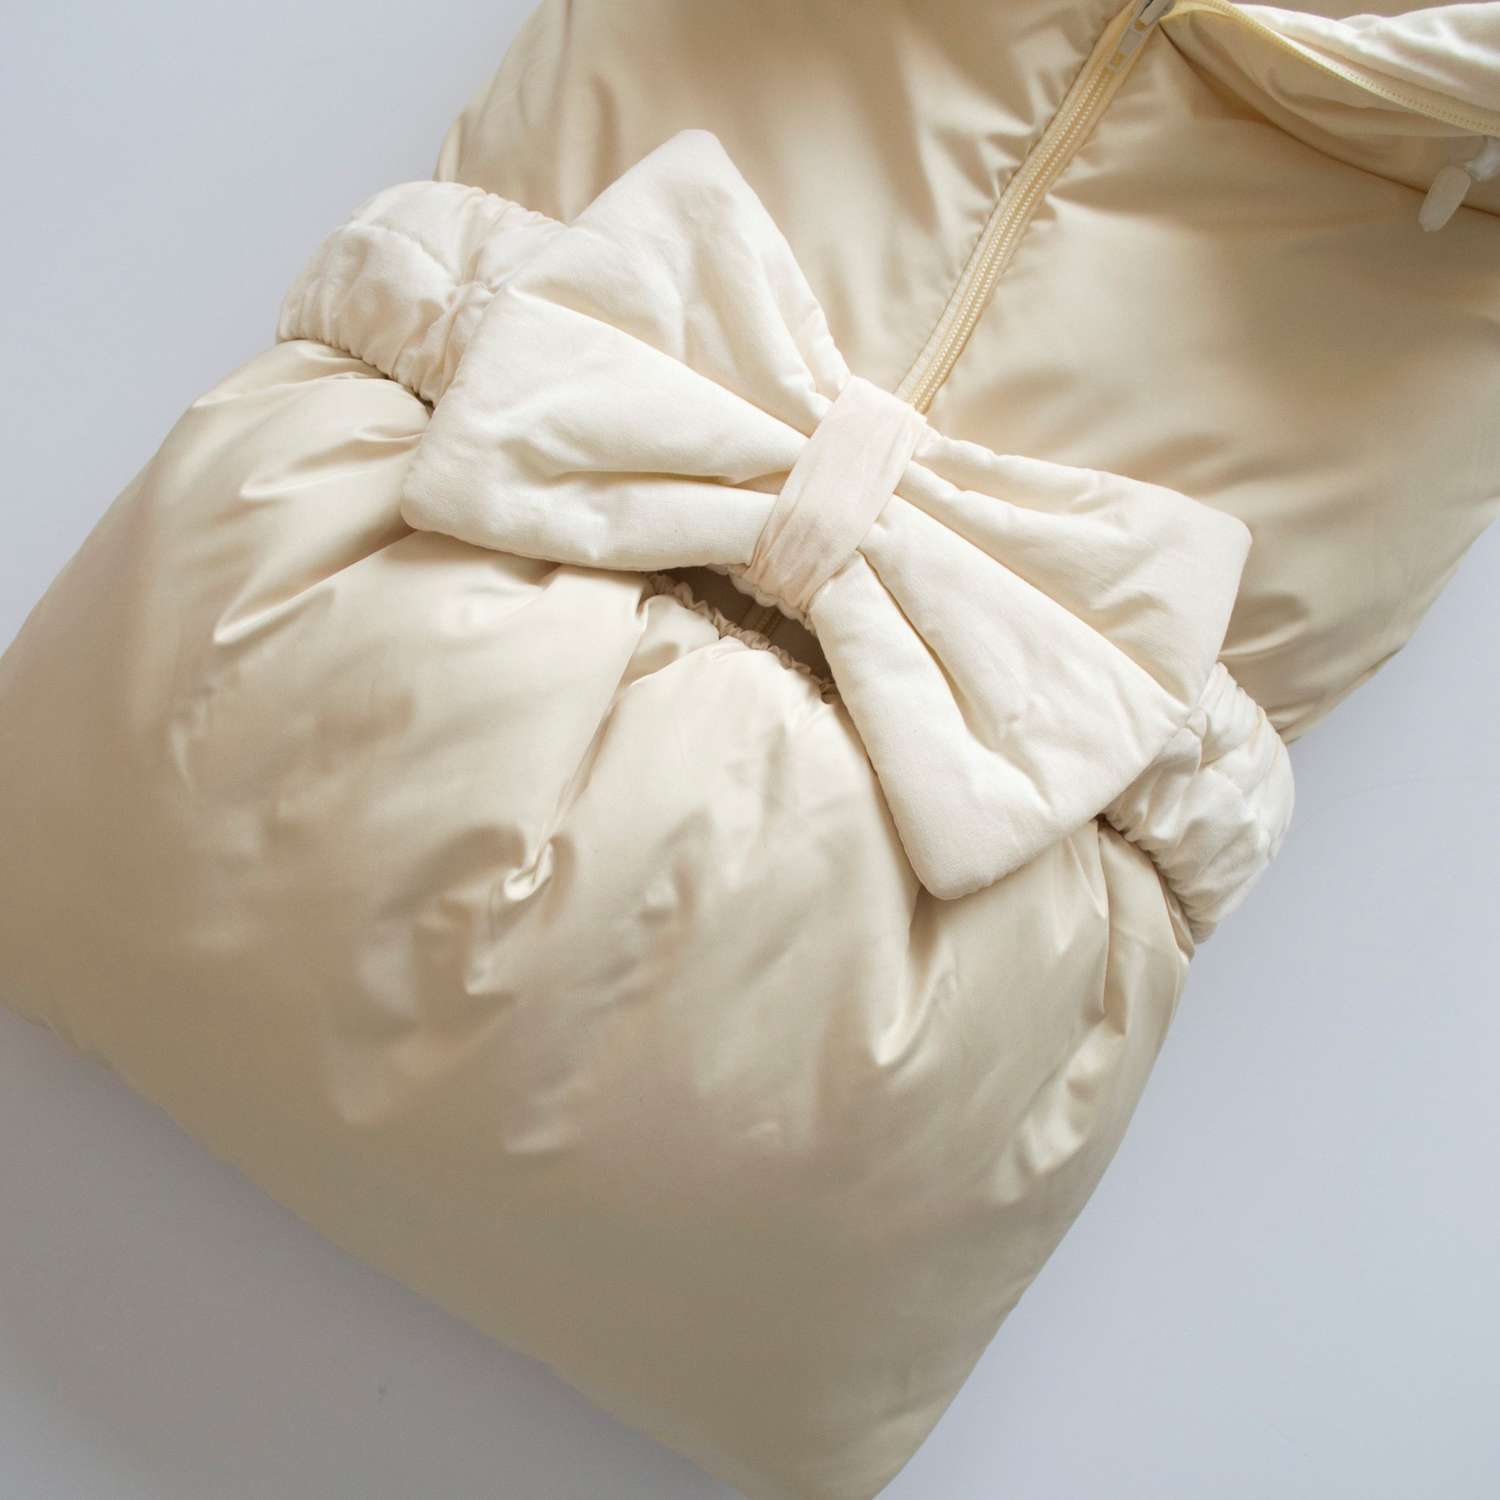 Одеяло-трансформер Clapsy Крем-брюле молочный - фото 9